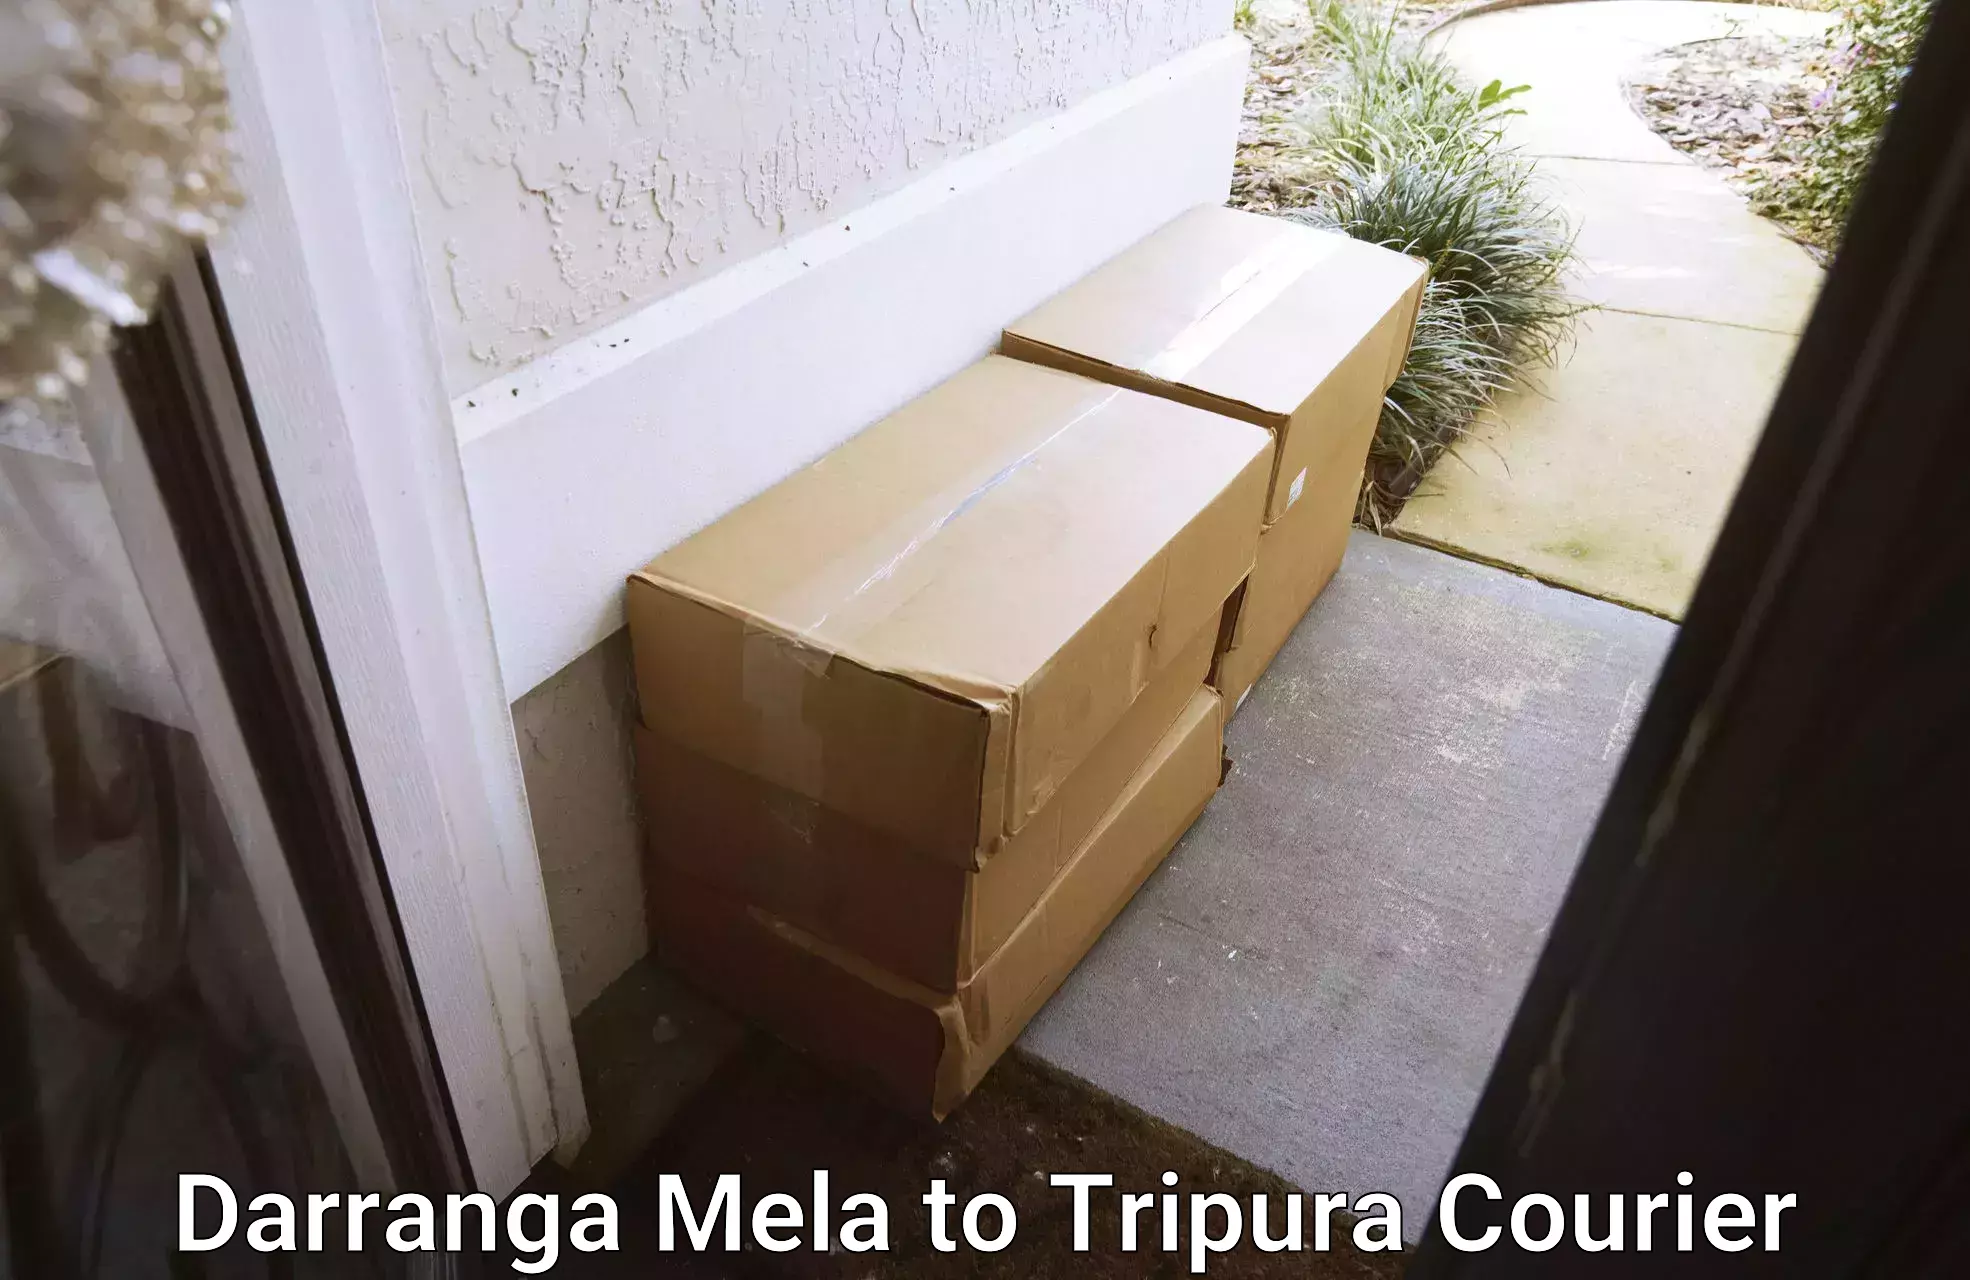 Modern delivery methods in Darranga Mela to Agartala